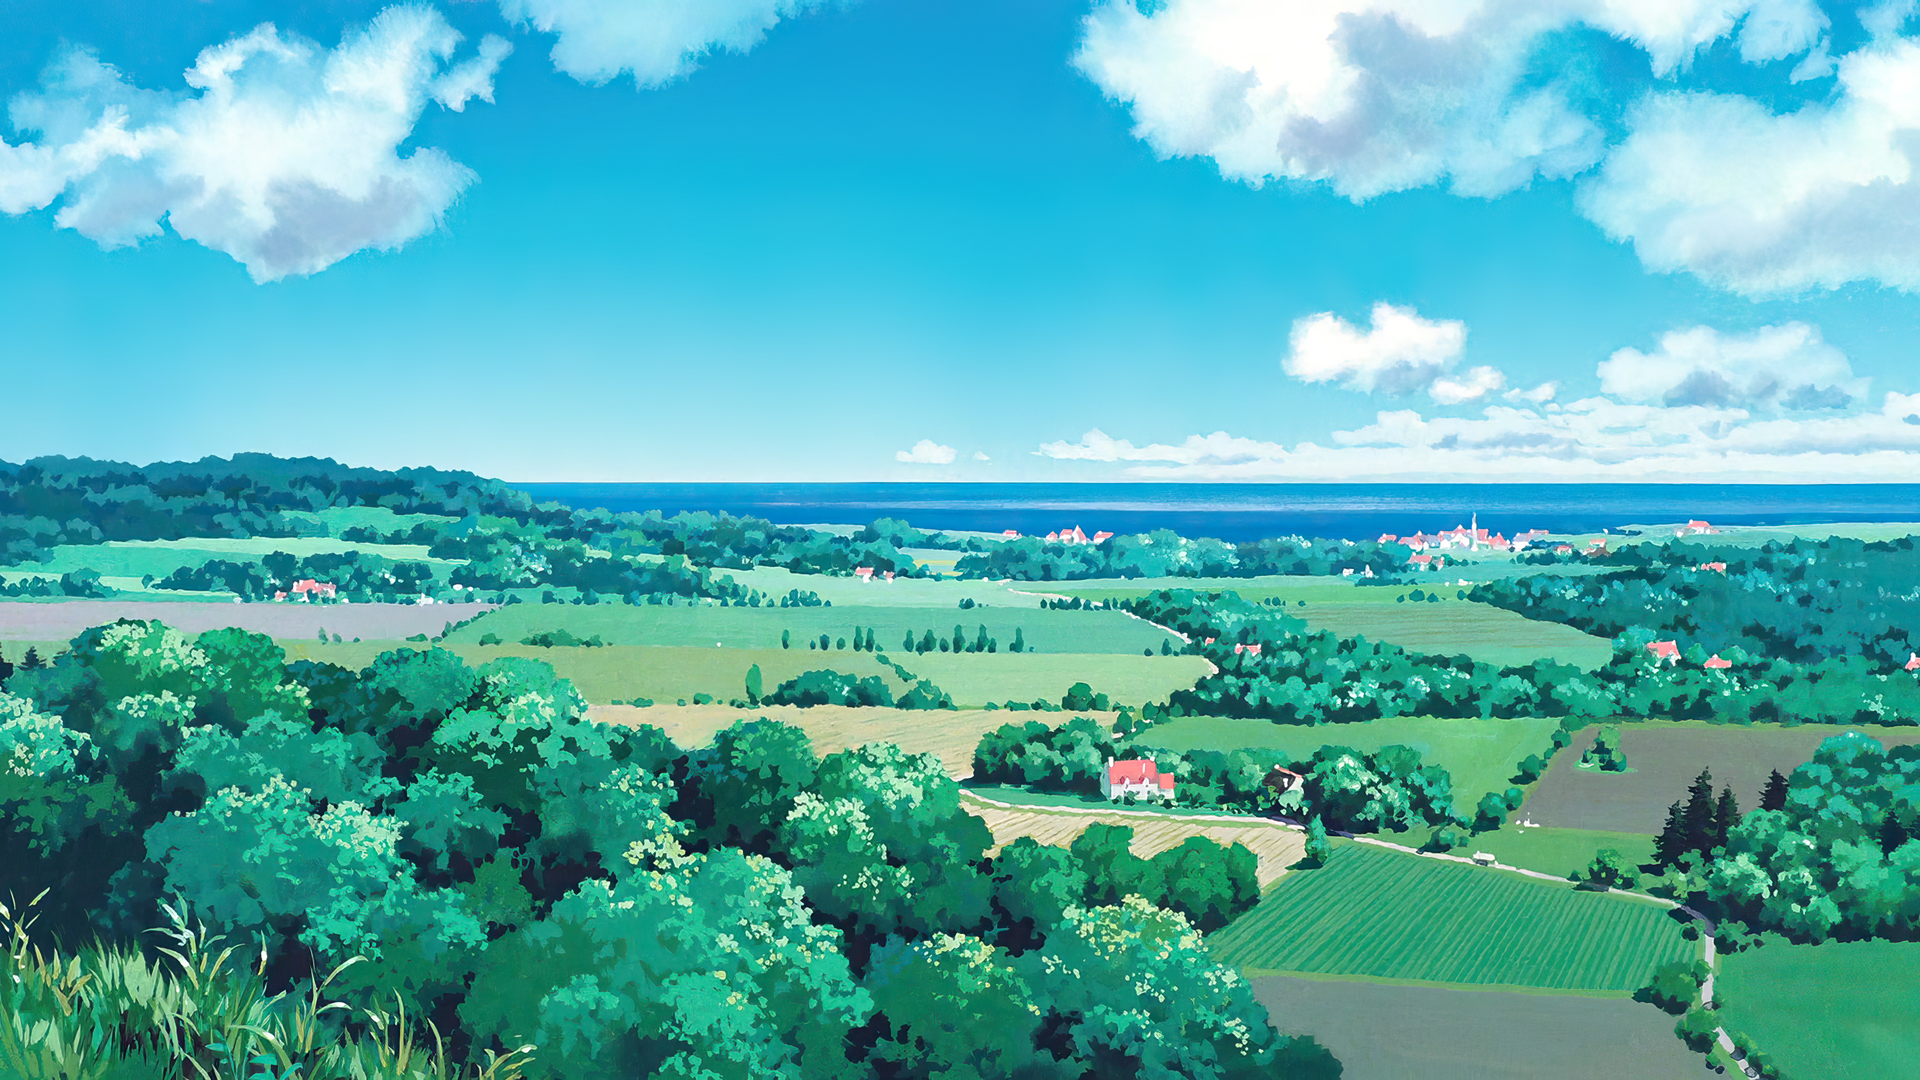 Anime 1920x1080 Kiki's Delivery Service animated movies anime animation film stills Studio Ghibli Hayao Miyazaki sky clouds trees forest rural landscape house sea summer